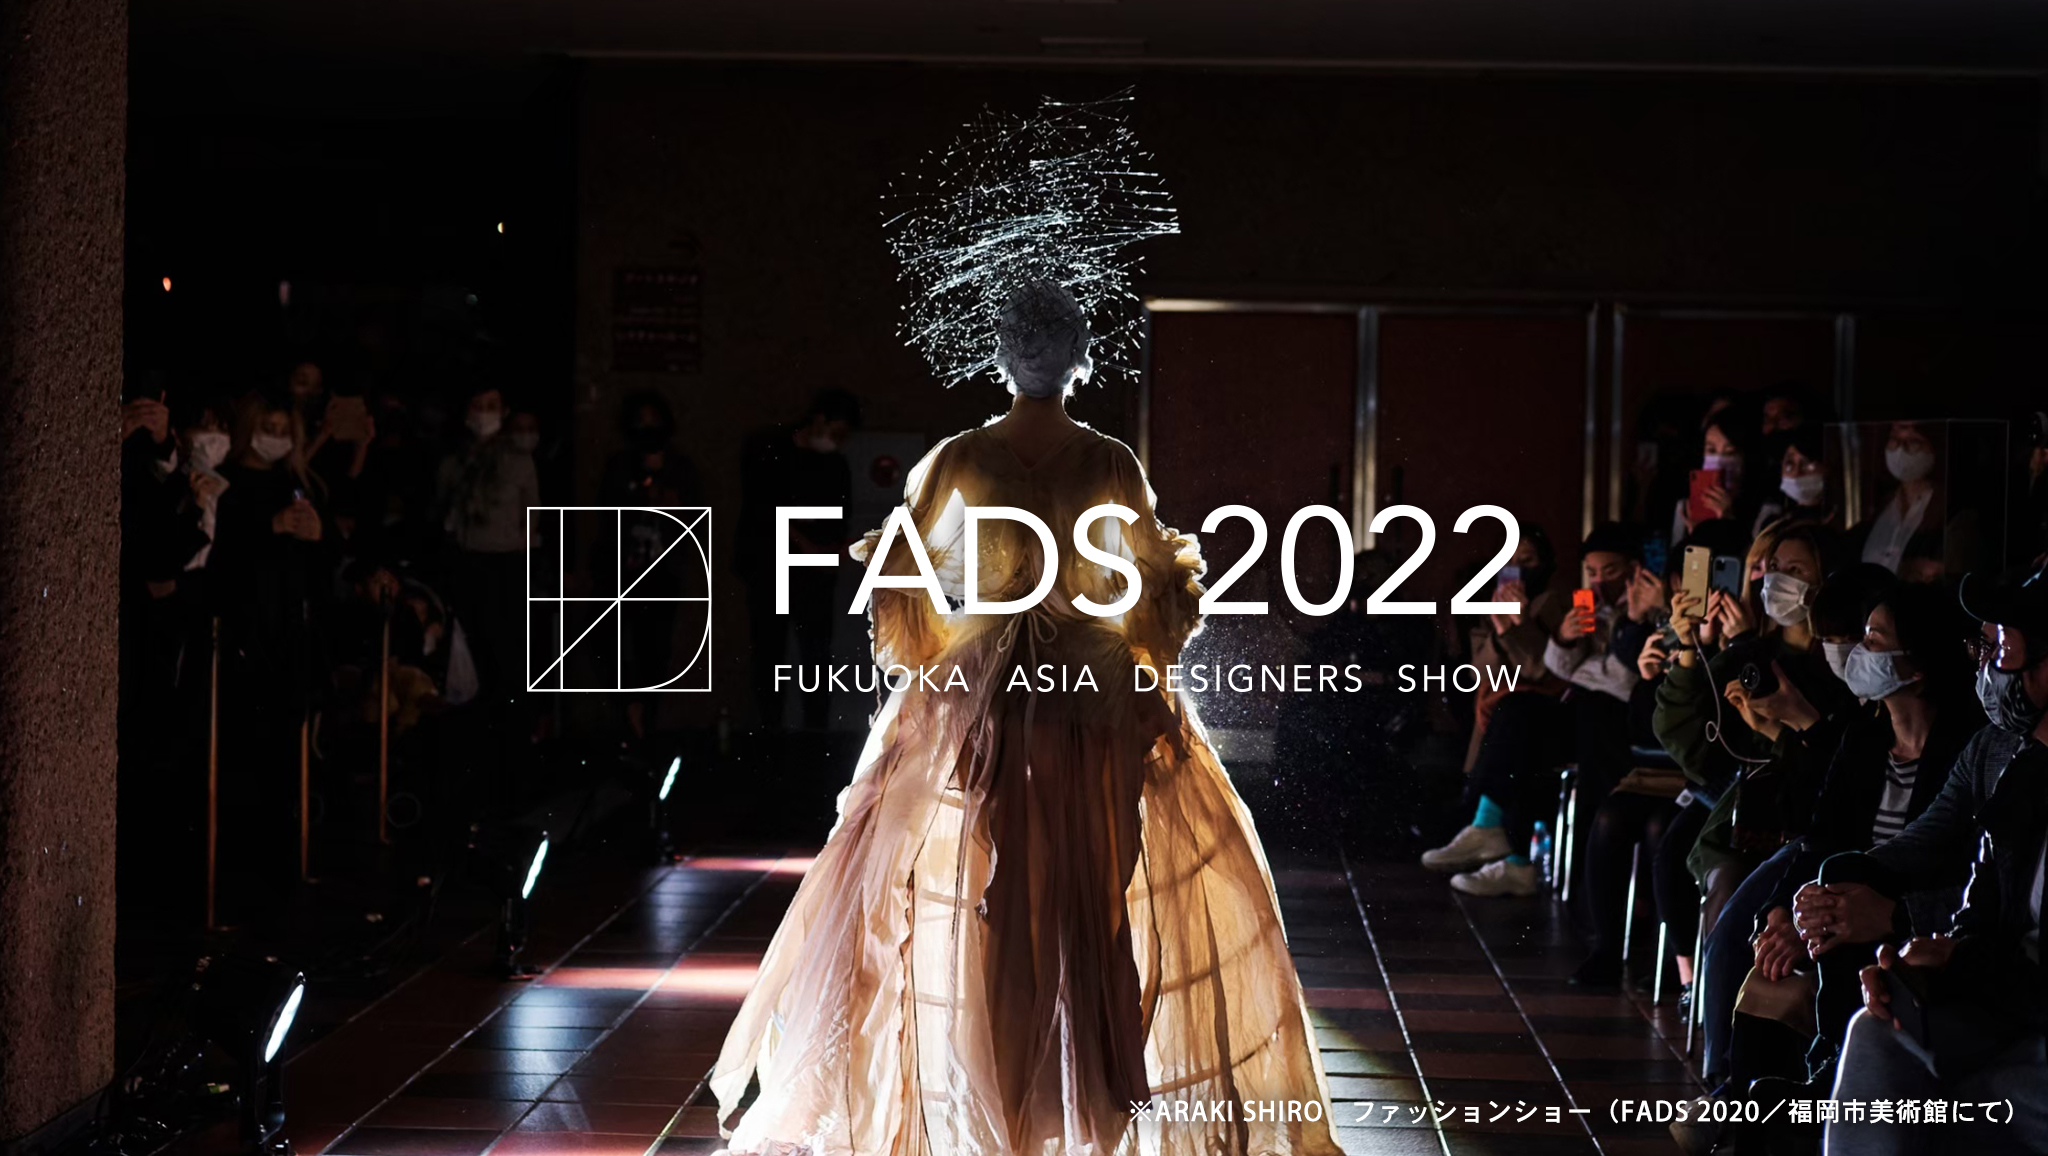 FUKUOKA ASIA DESIGNERS SHOW 2022